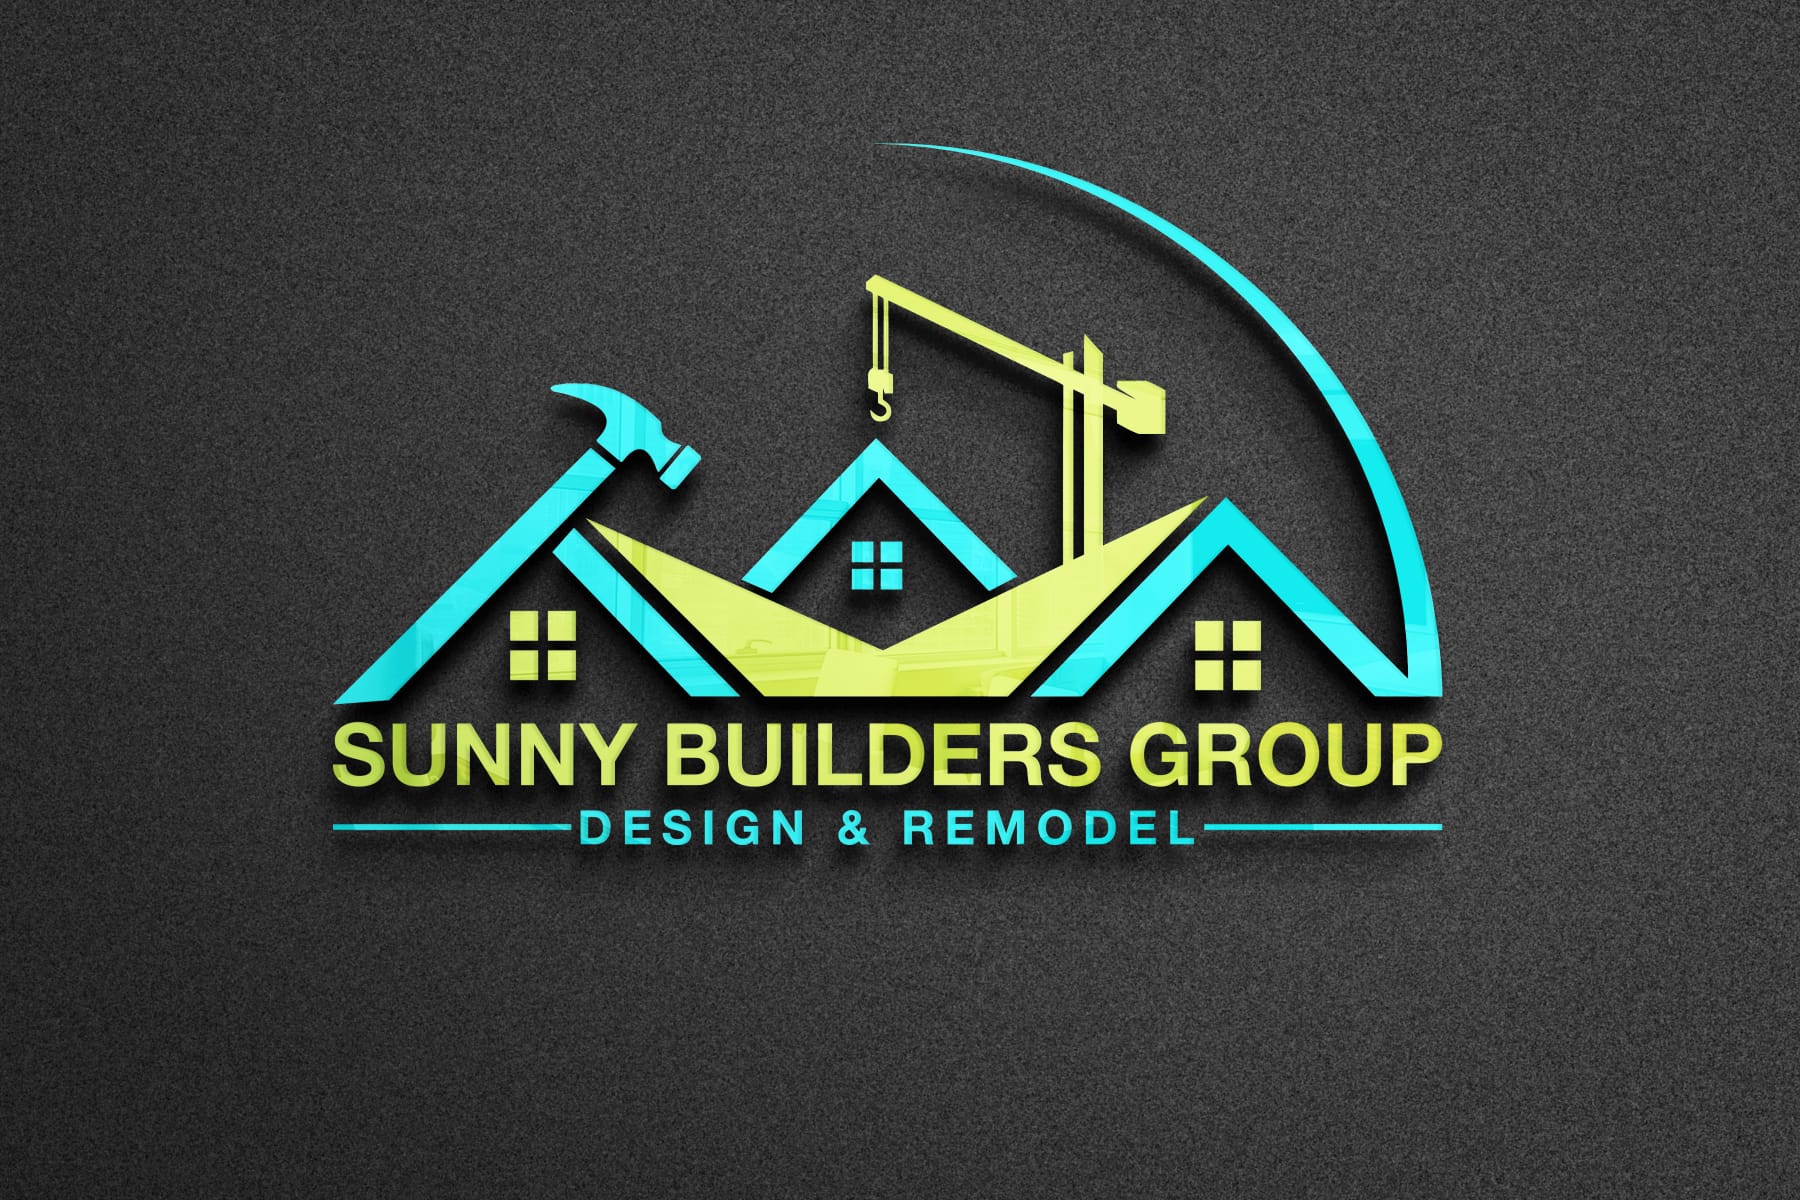 Sunny-Builders-Group-Backyard-DesignRemodel-San-Diego-LOGO.jpg